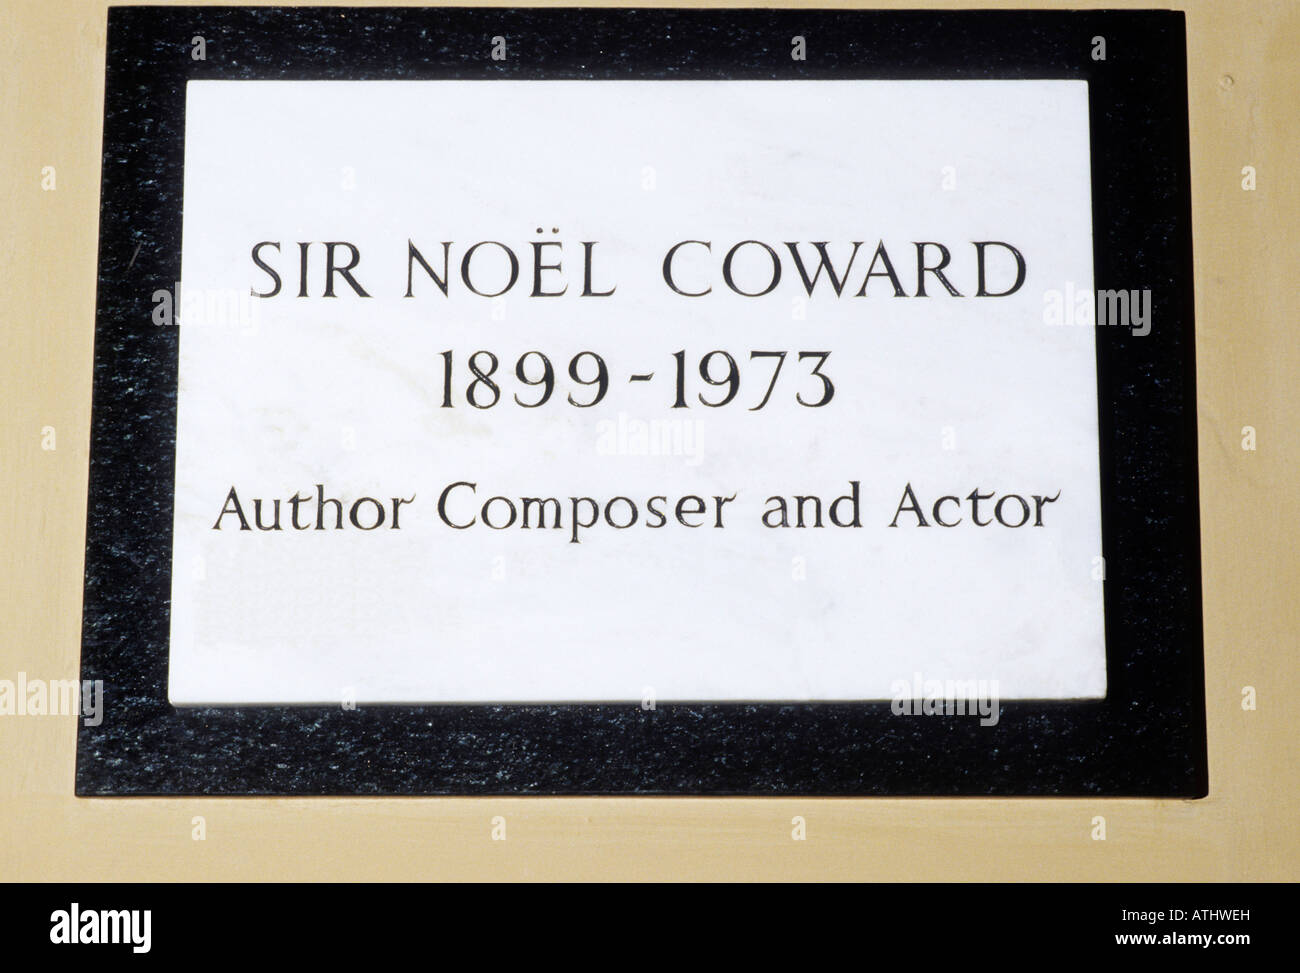 St Pauls actores Iglesia Covent Garden Sir Noel Coward placa conmemorativa de Londres Inglaterra conmemoración Foto de stock